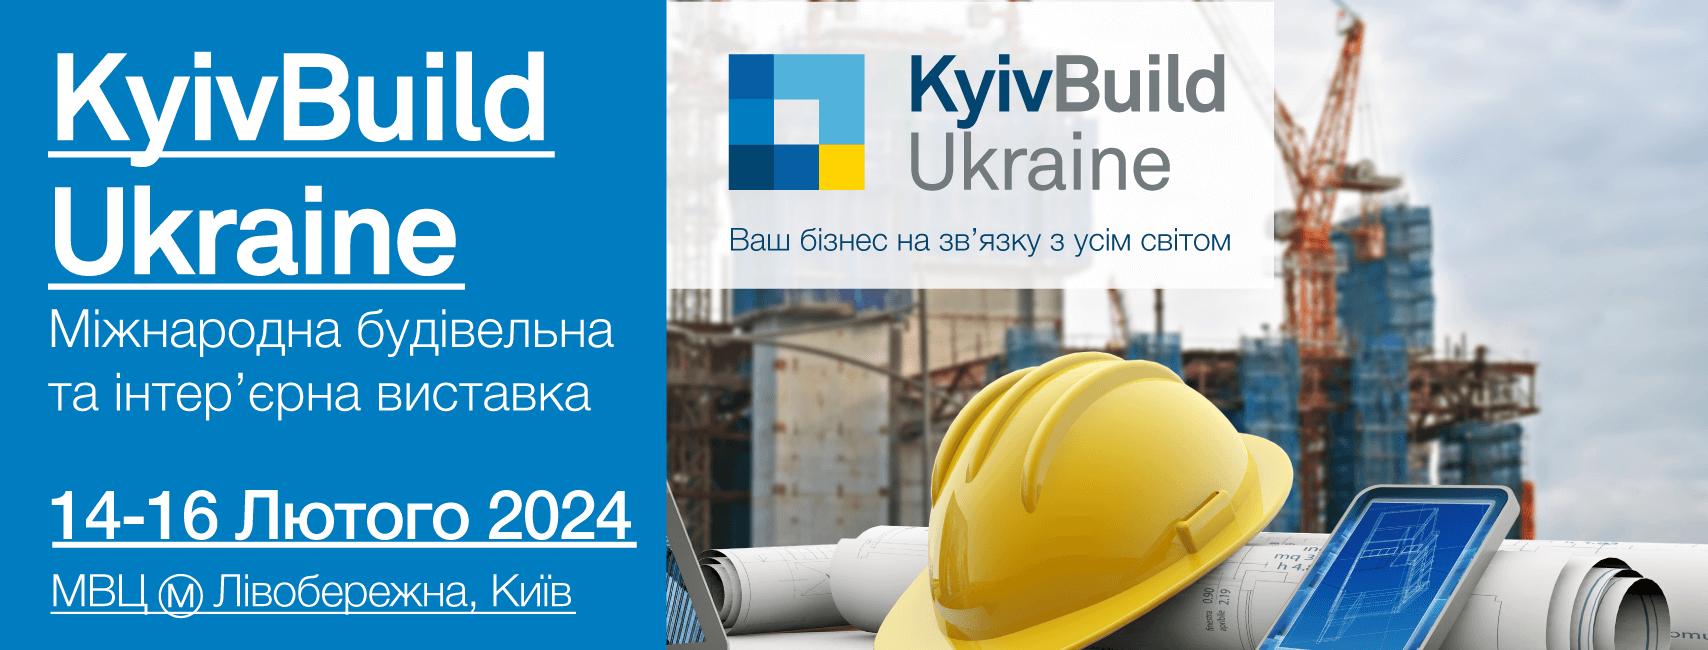 KyivBuild Ukraine 2024